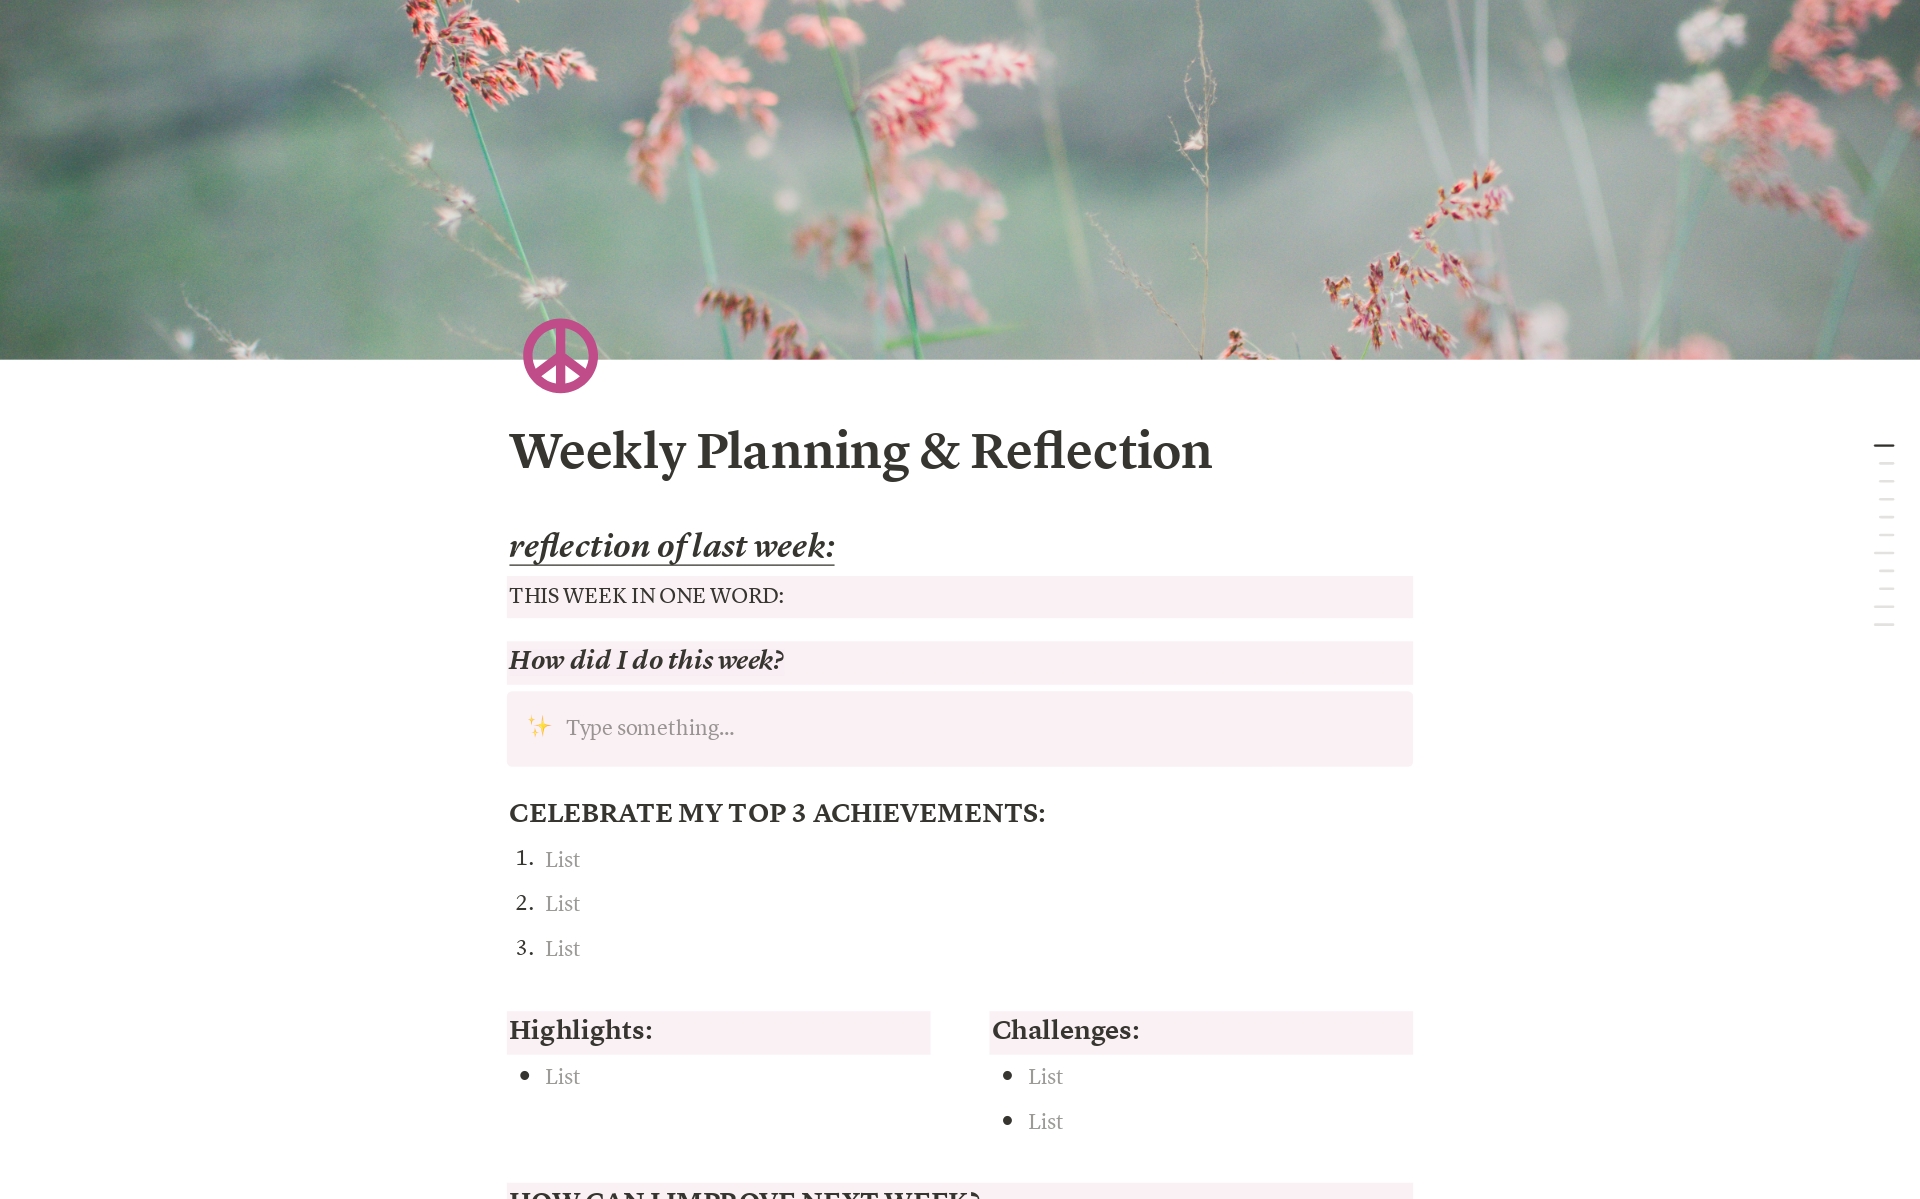 Aperçu du modèle de Weekly Planning & Reflection